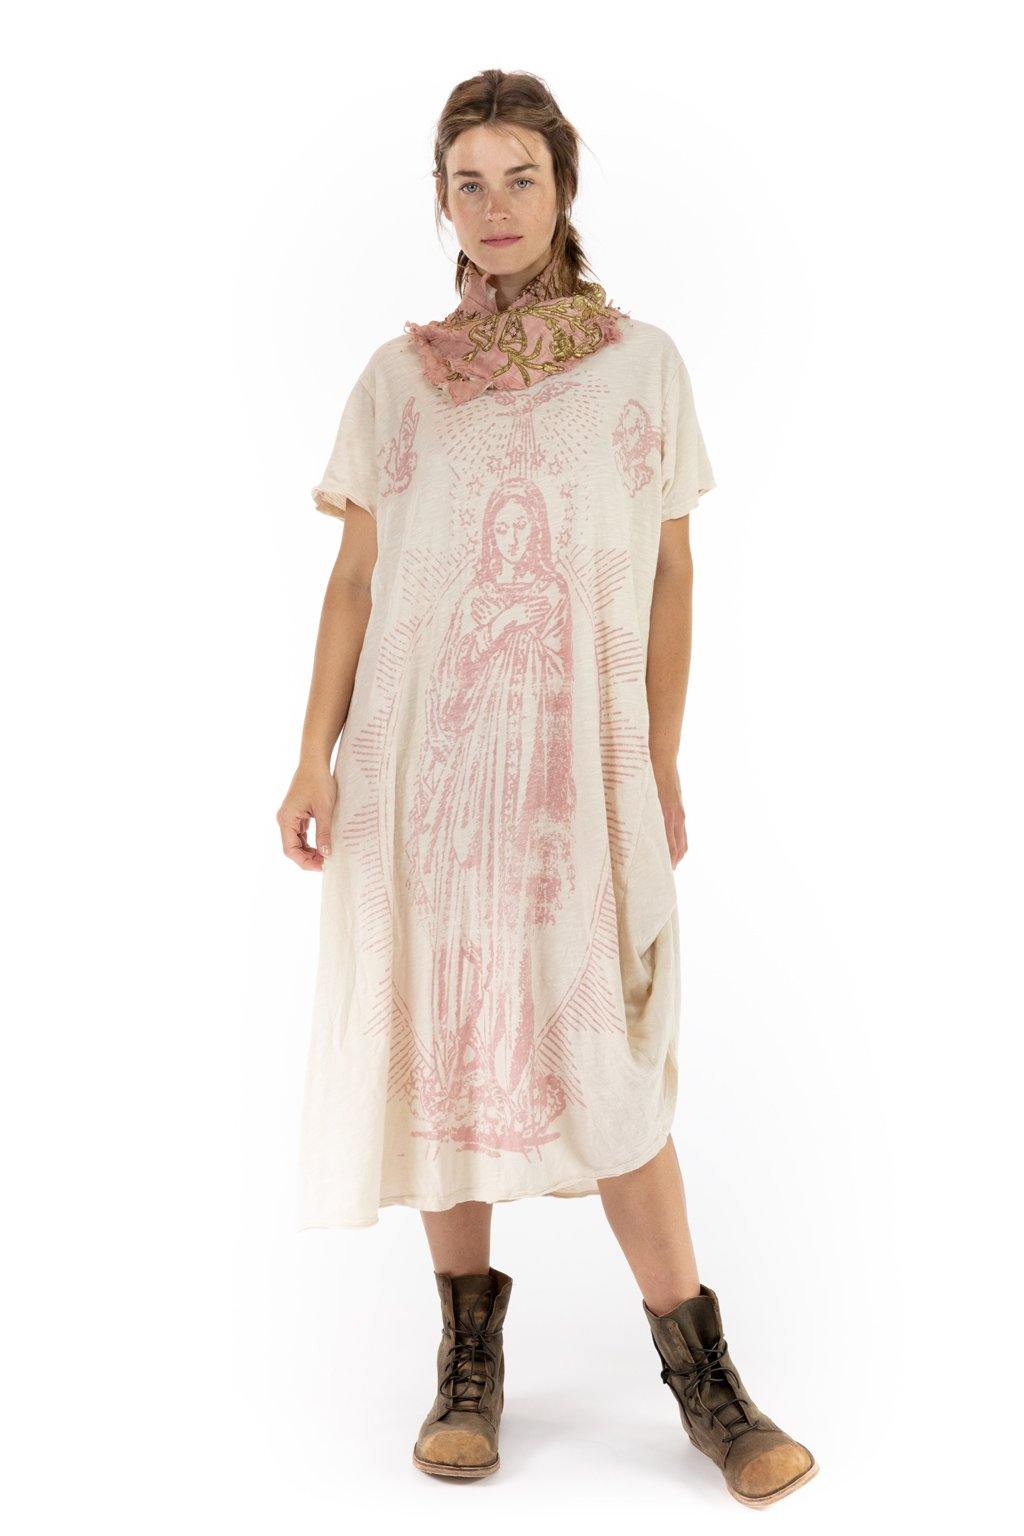 Mary of Prosperity T Dress - Magnolia Pearl Clothing